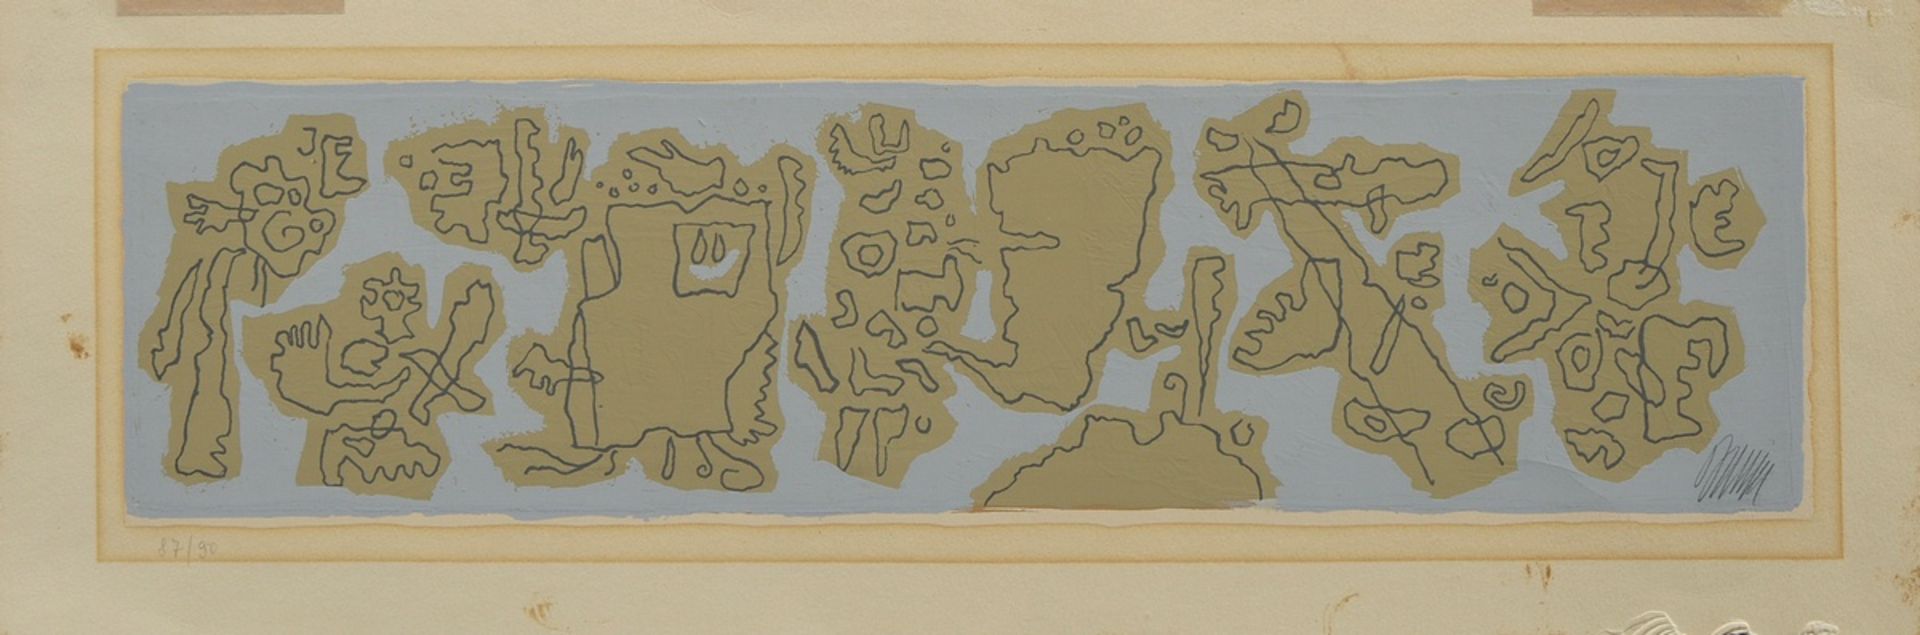 Baumeister, Willi (1889-1955) "Gravurfries" ca. 1954, colour serigraphy, 87/90, b. sign./num., ligh